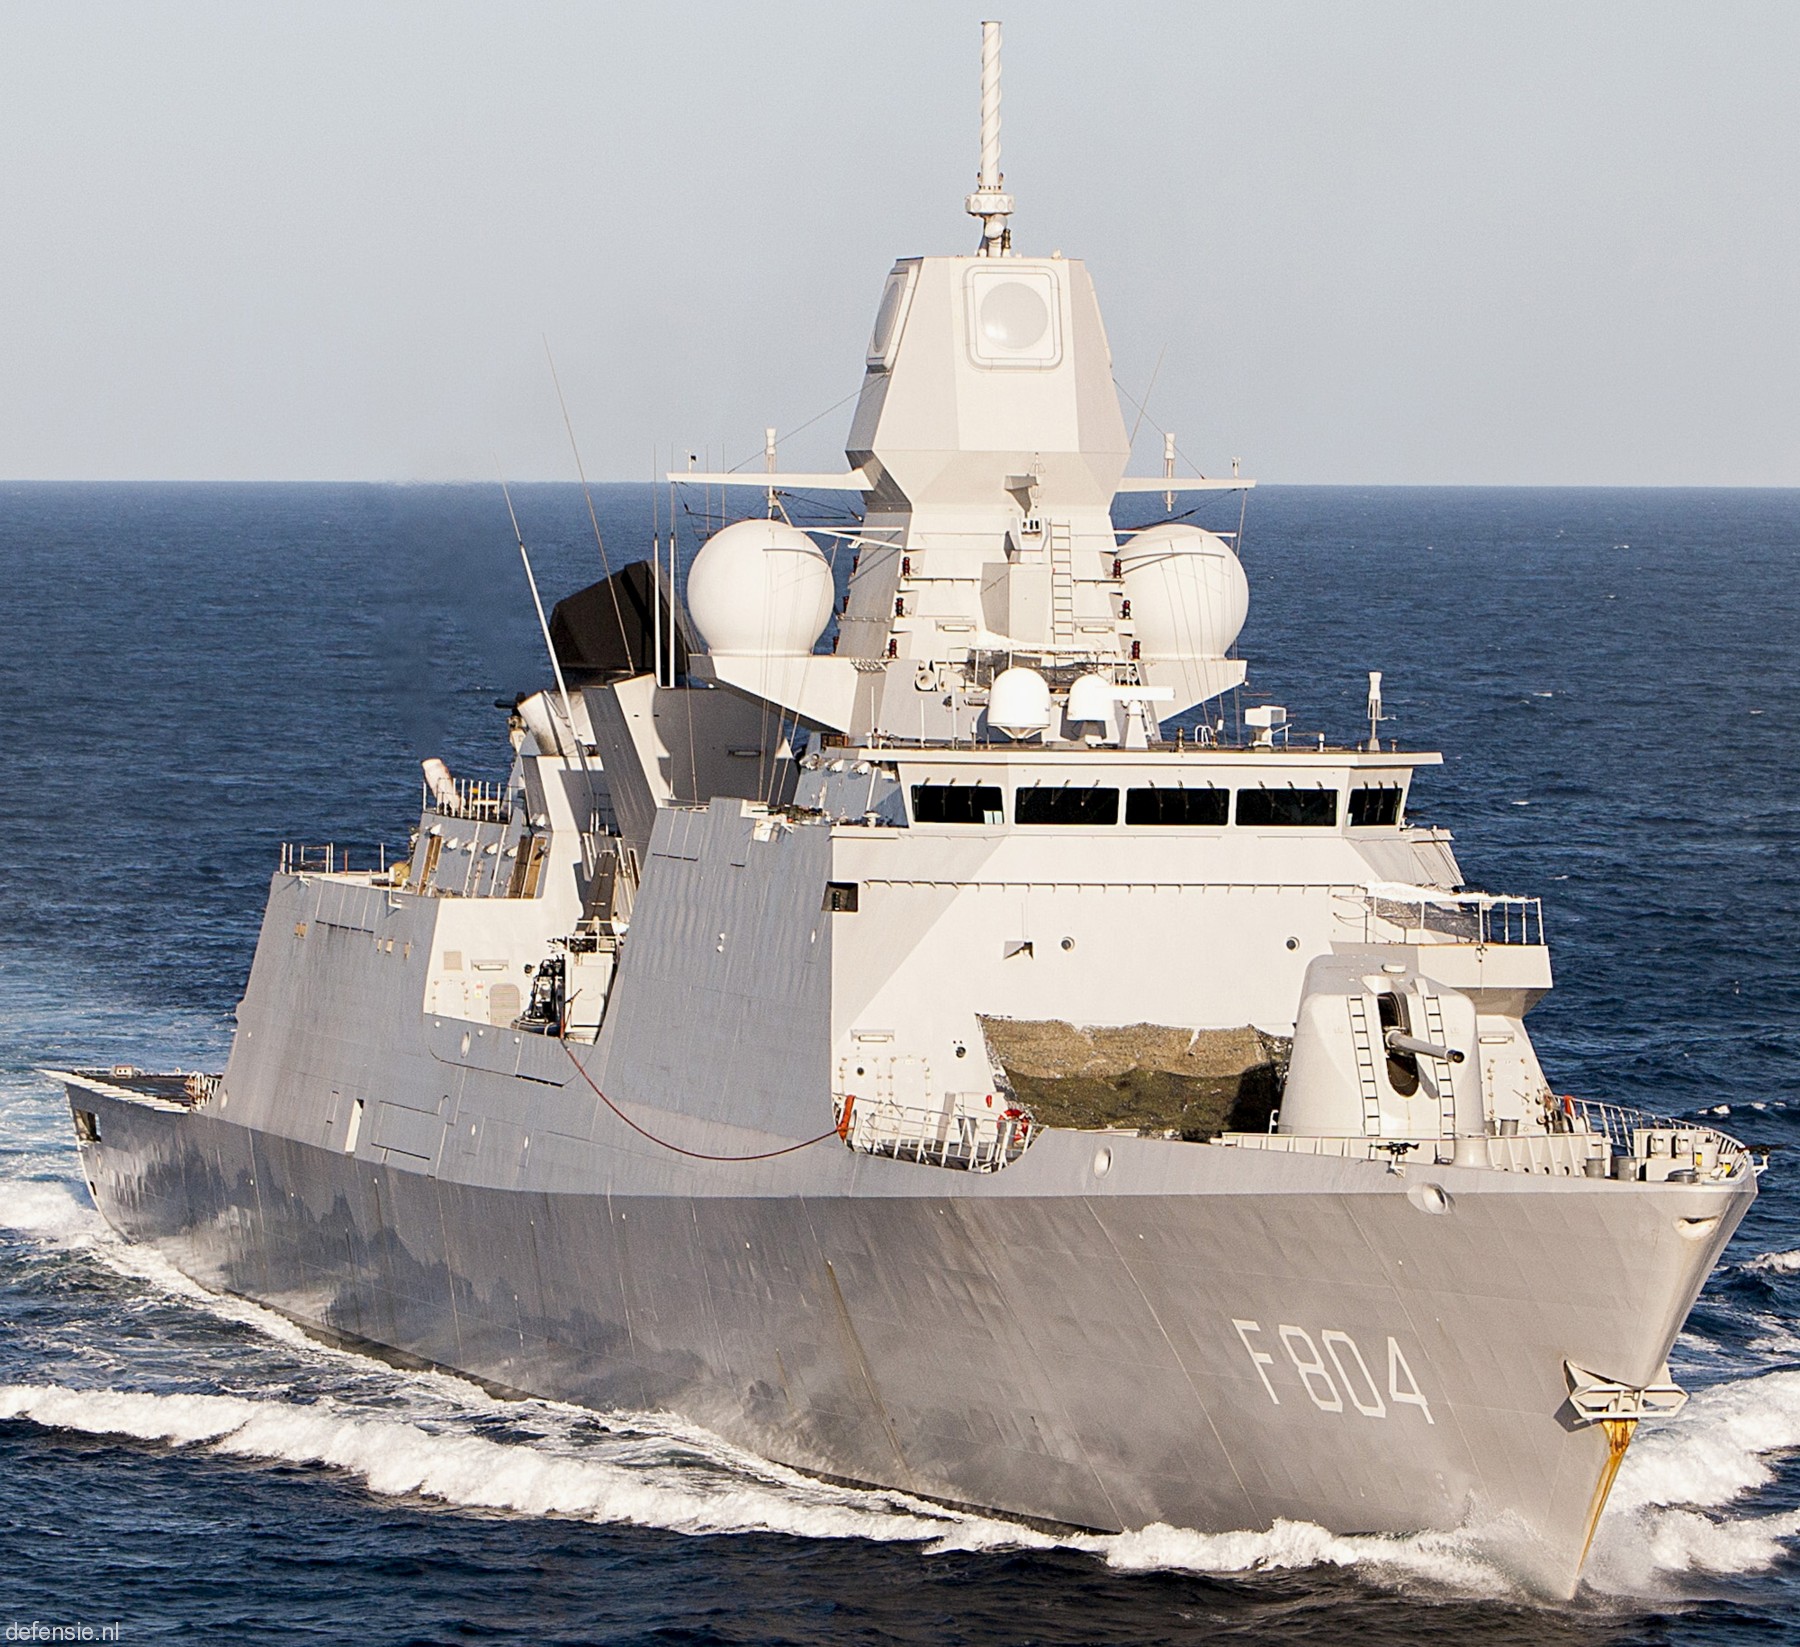 f-804 hnlms de ruyter guided missile frigate ffg lcf royal netherlands navy 18